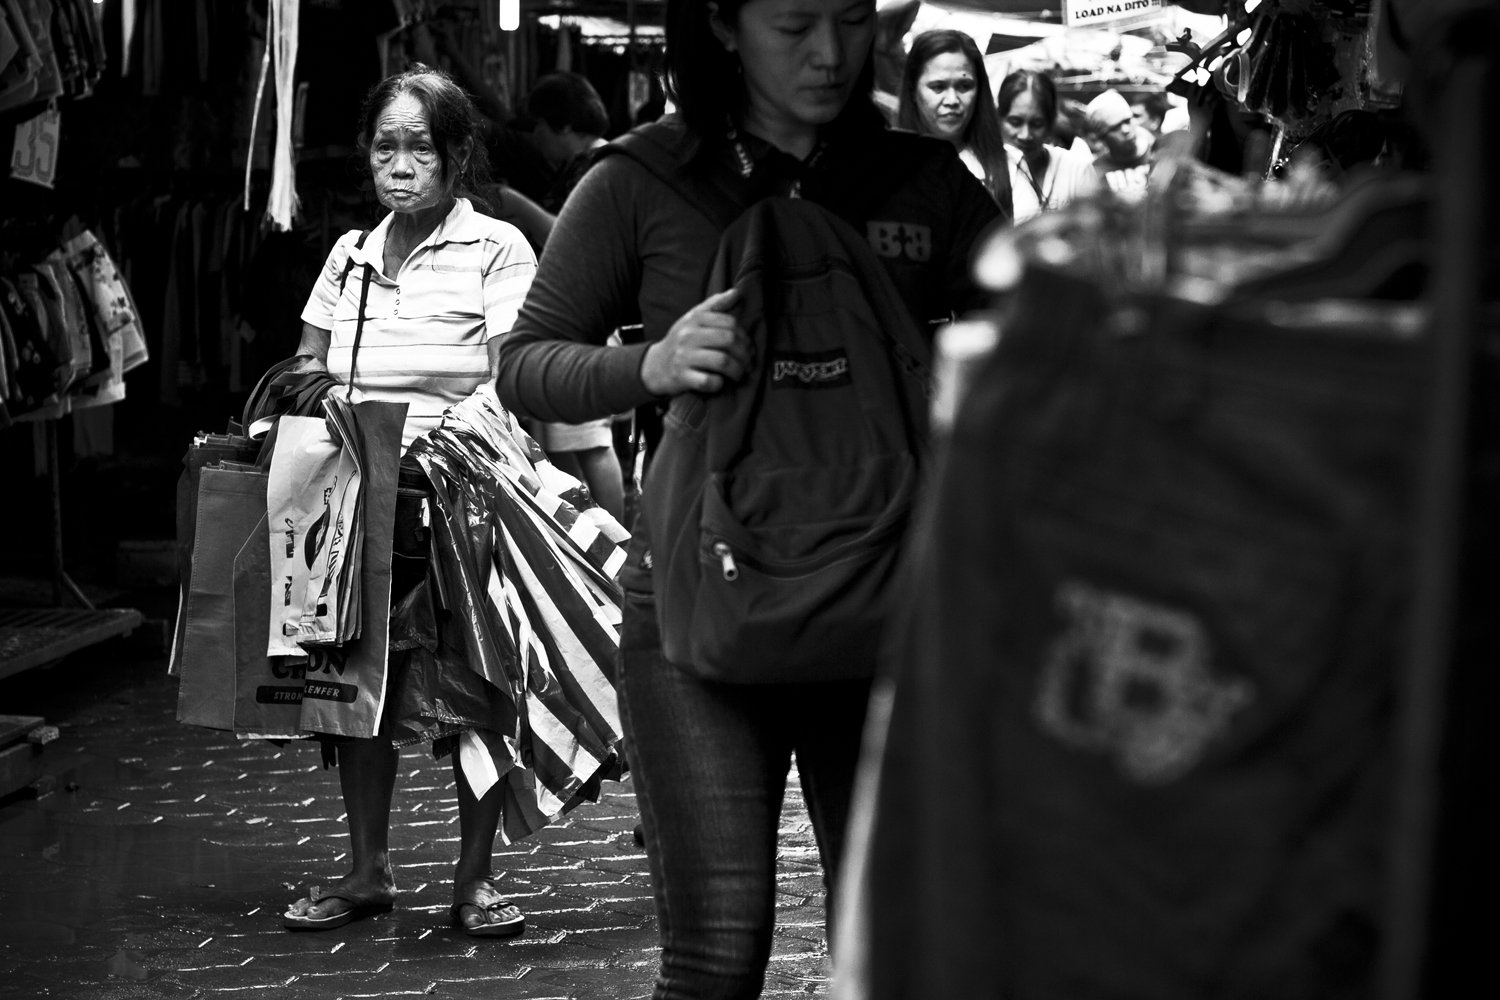 www.im-in-manila.jimdo.com - Selling - Photowalk in Binondo